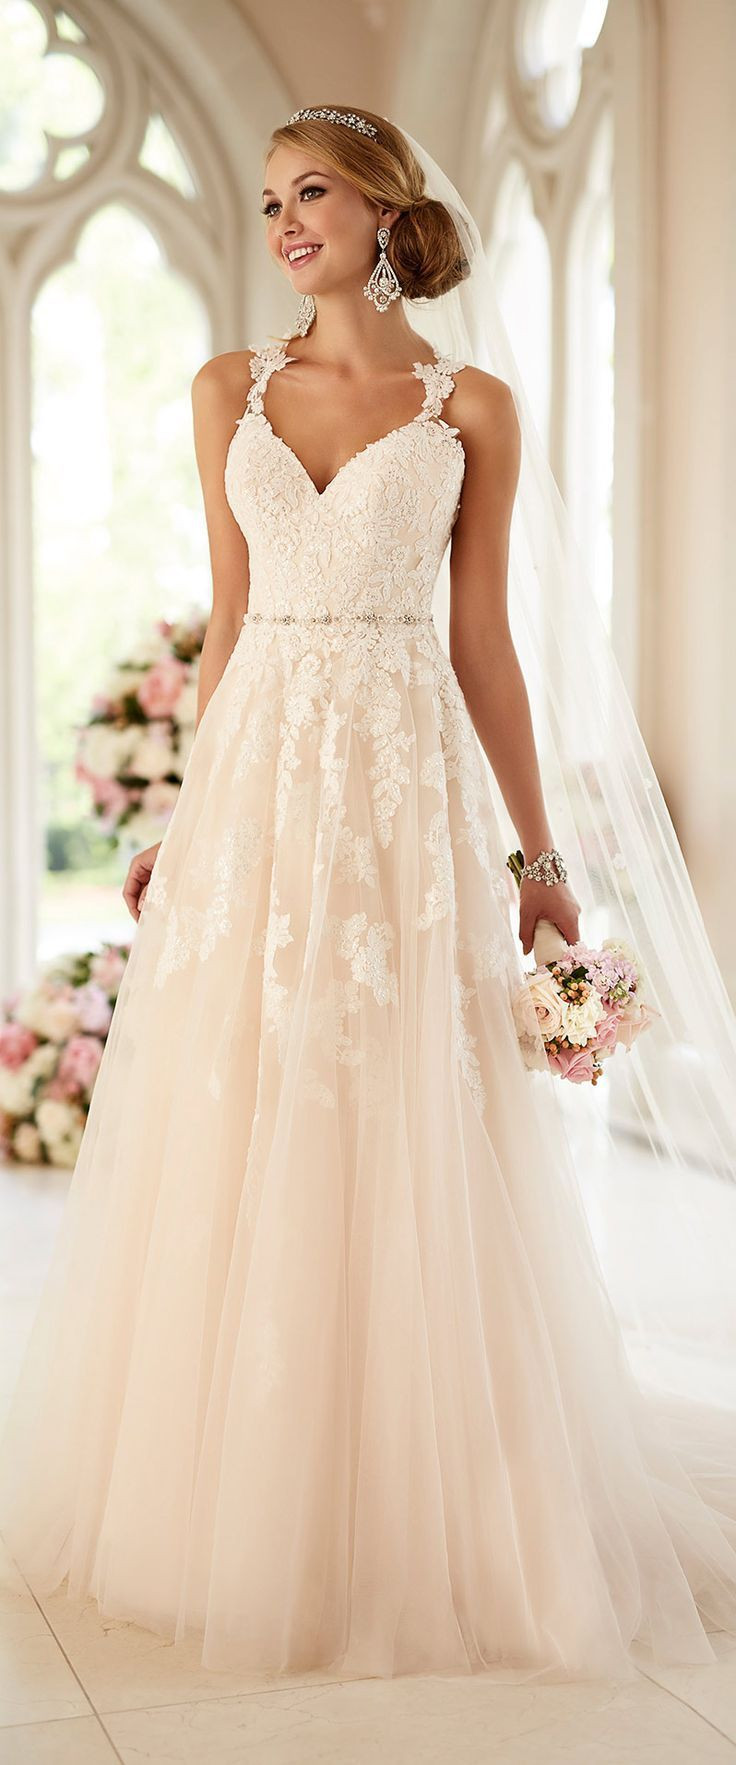 Lace Wedding Dress Pinterest
 Best 25 Strapless wedding dresses ideas only on Pinterest